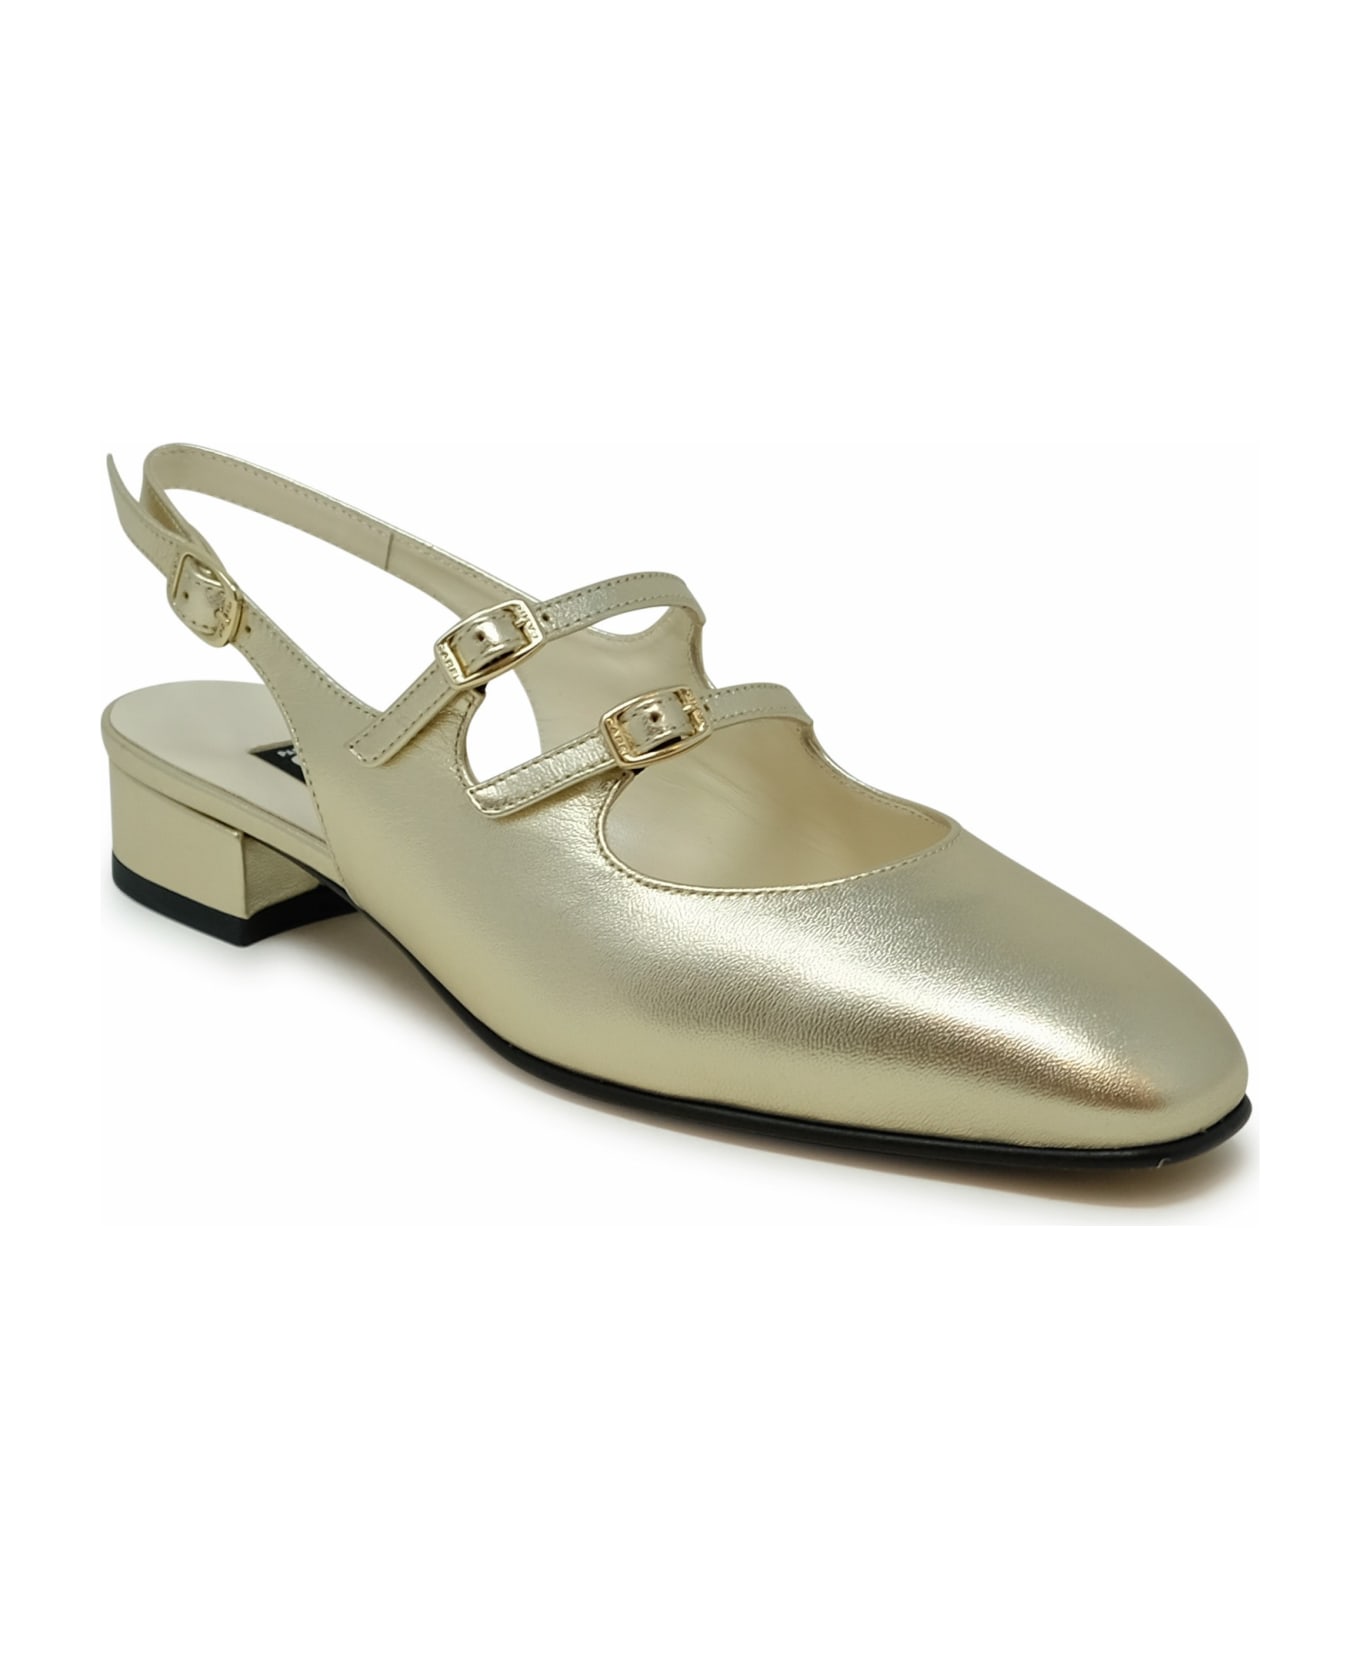 Carel Paris Gold Leather Ballet Flats - GOLD ハイヒール